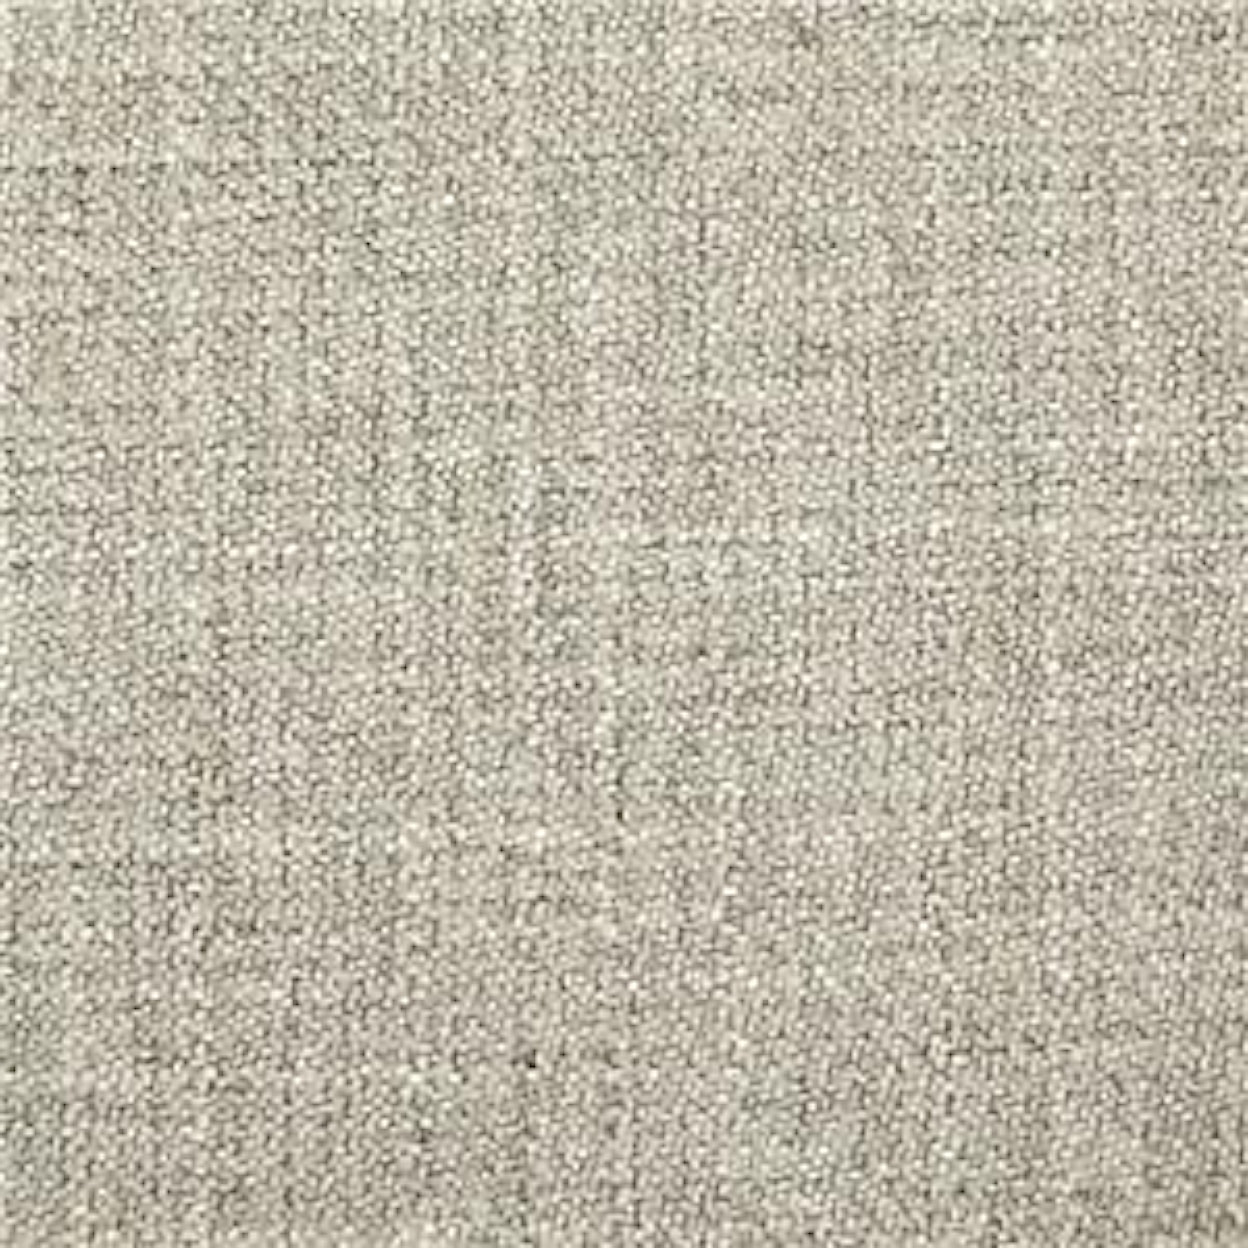 Linen-Look Fabric 2447-34CC